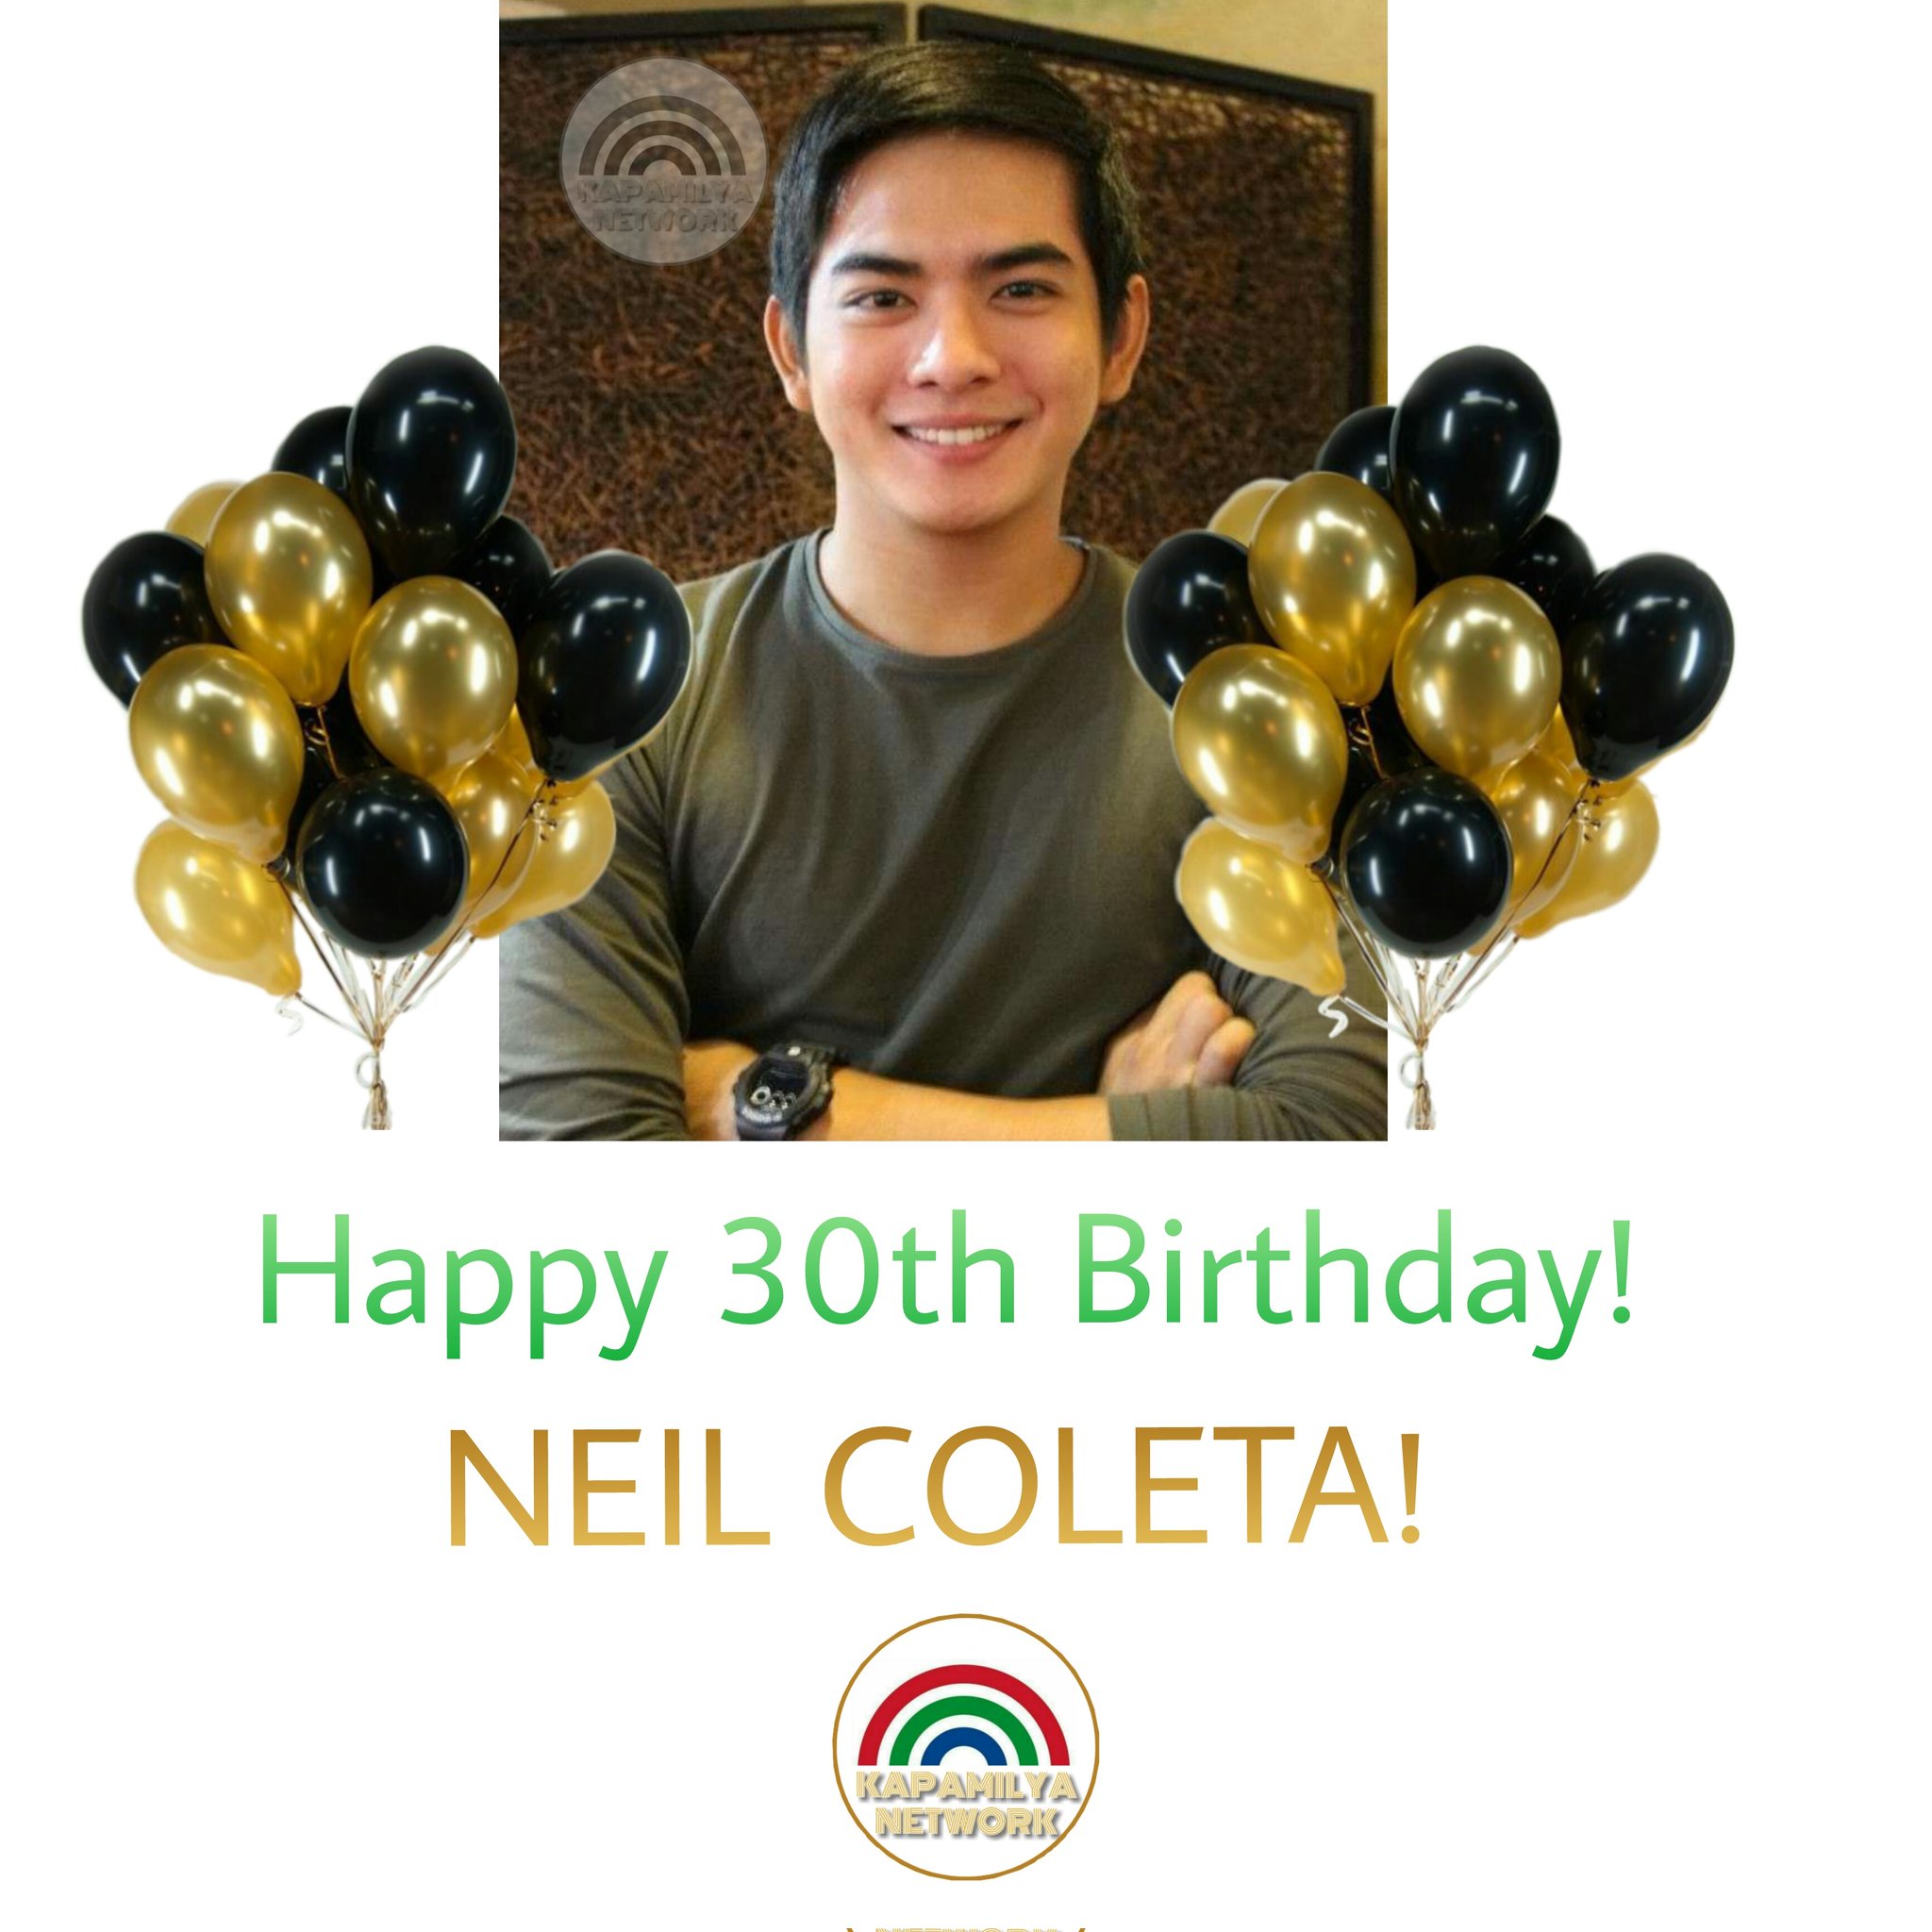 Happy 30th Birthday! Neil Coleta!!! 